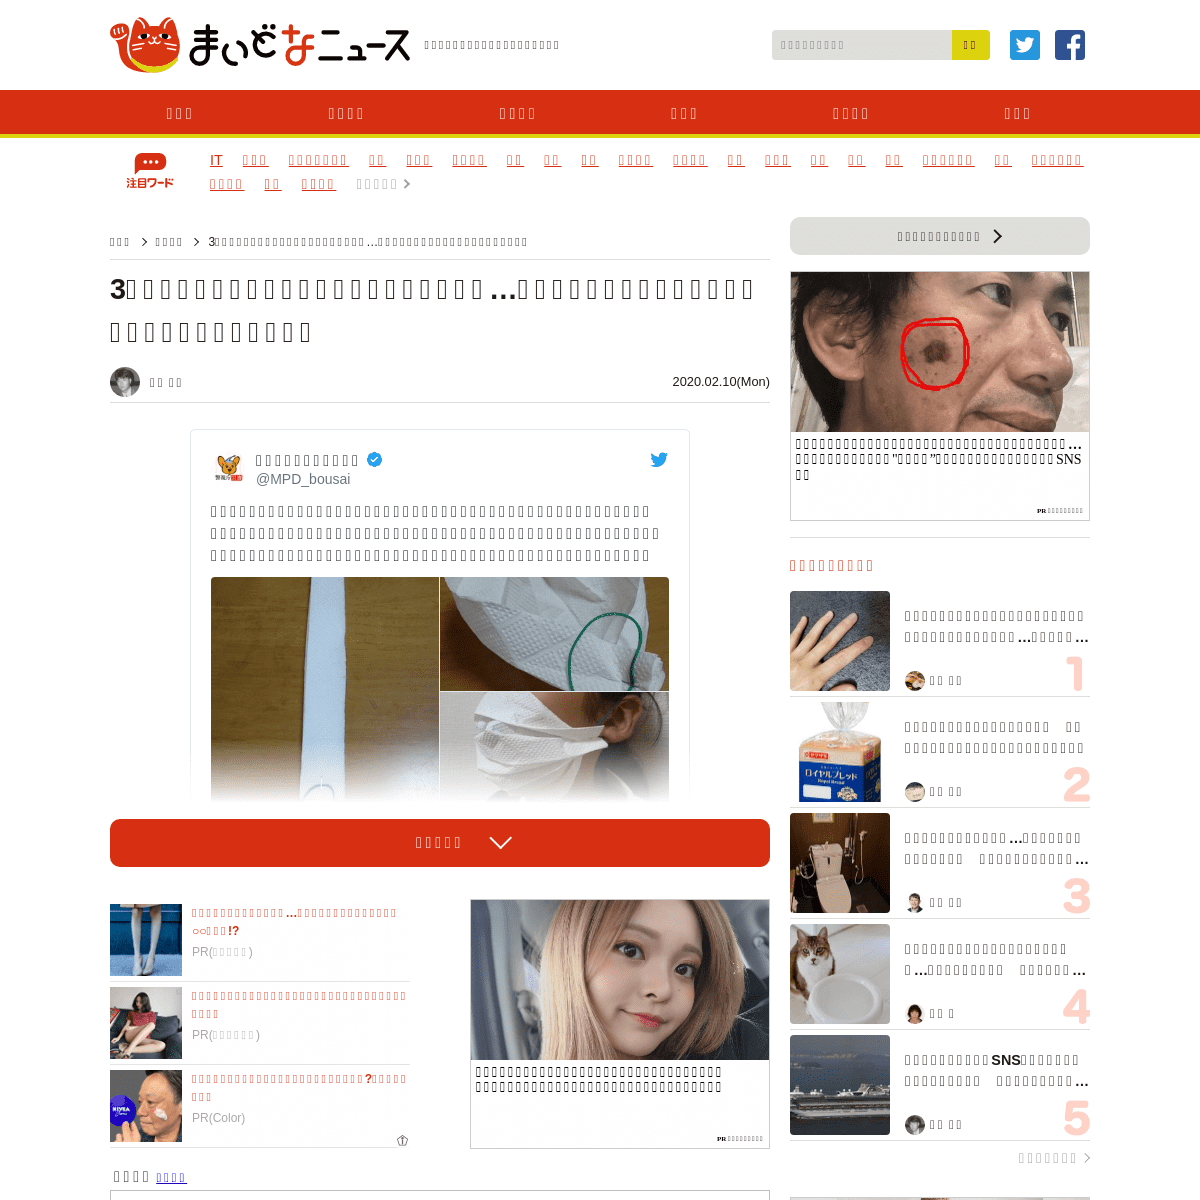 A complete backup of maidonanews.jp/article/13117176